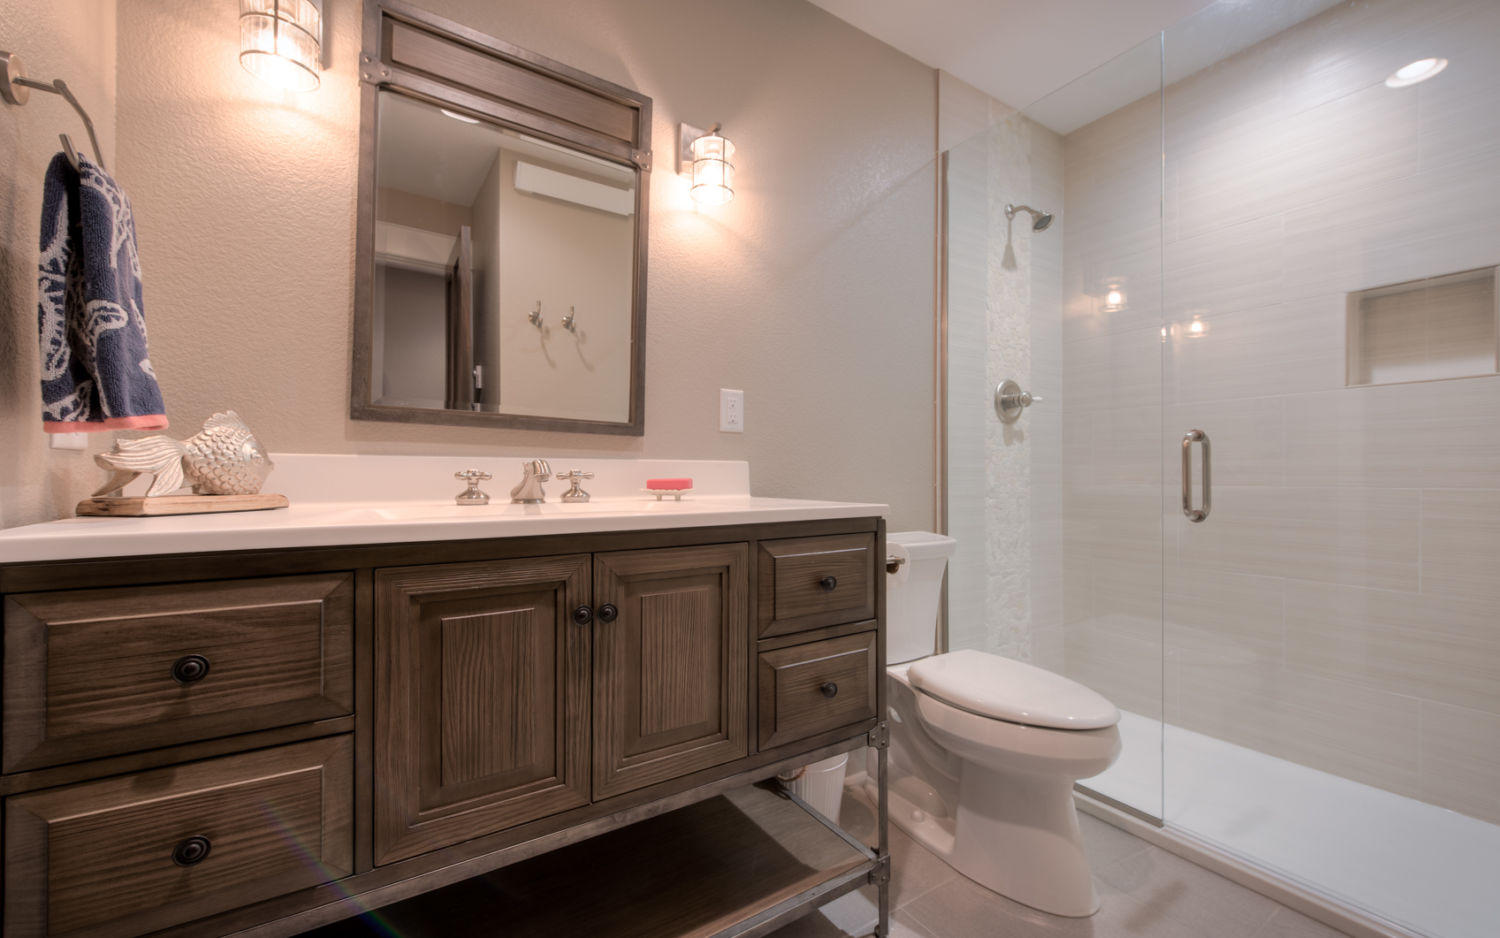 Reclaimed-guest-bathroom-vanity-and-shower